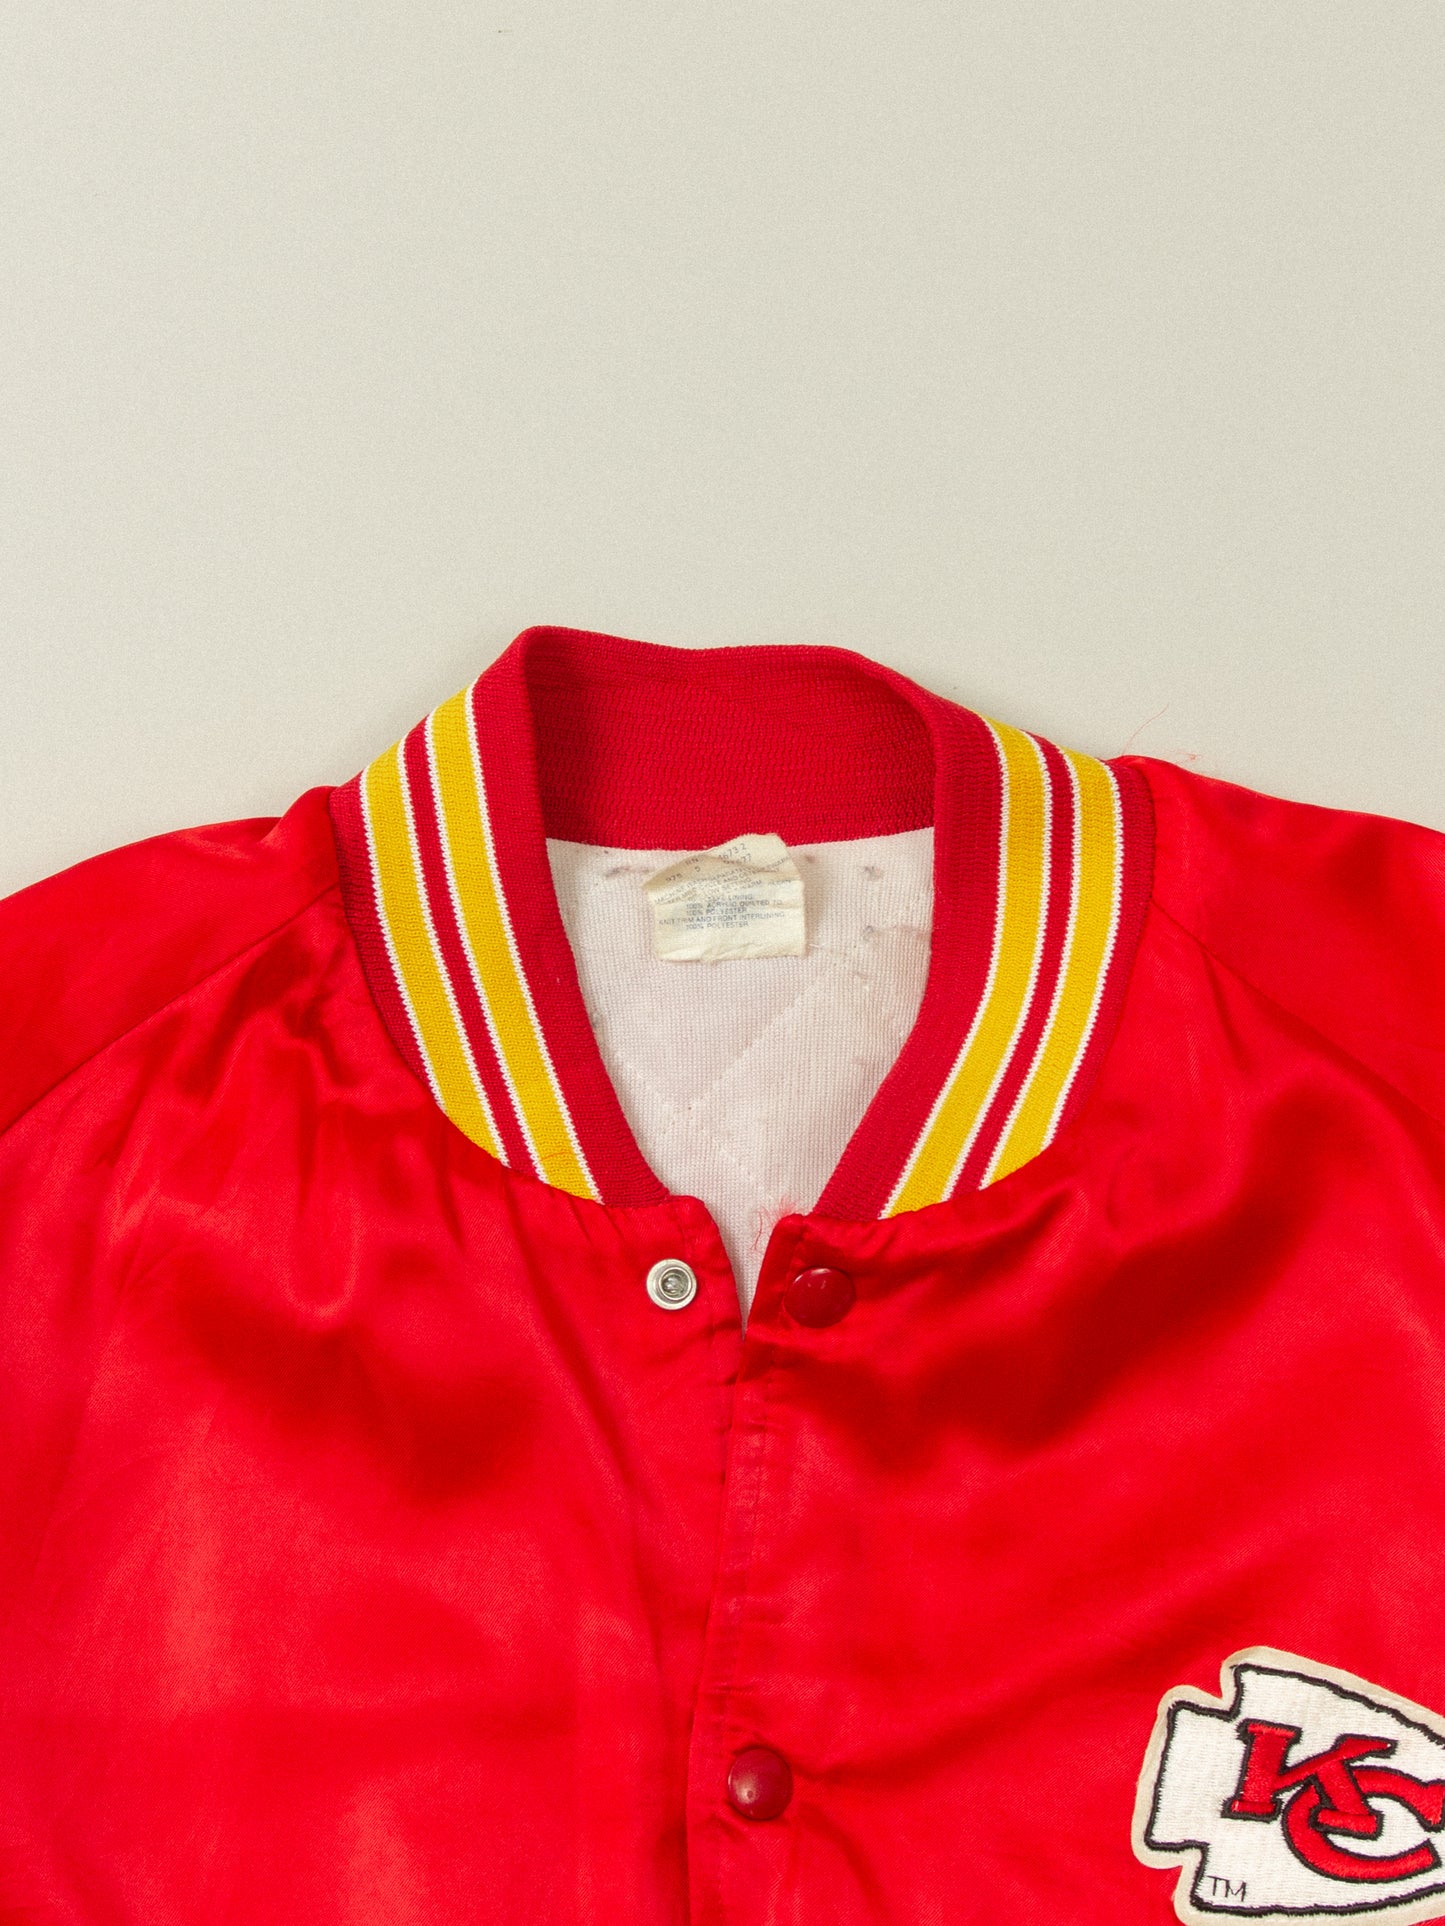 Vtg Kansas City Chiefs Sports Jacket - Made in USA (L)